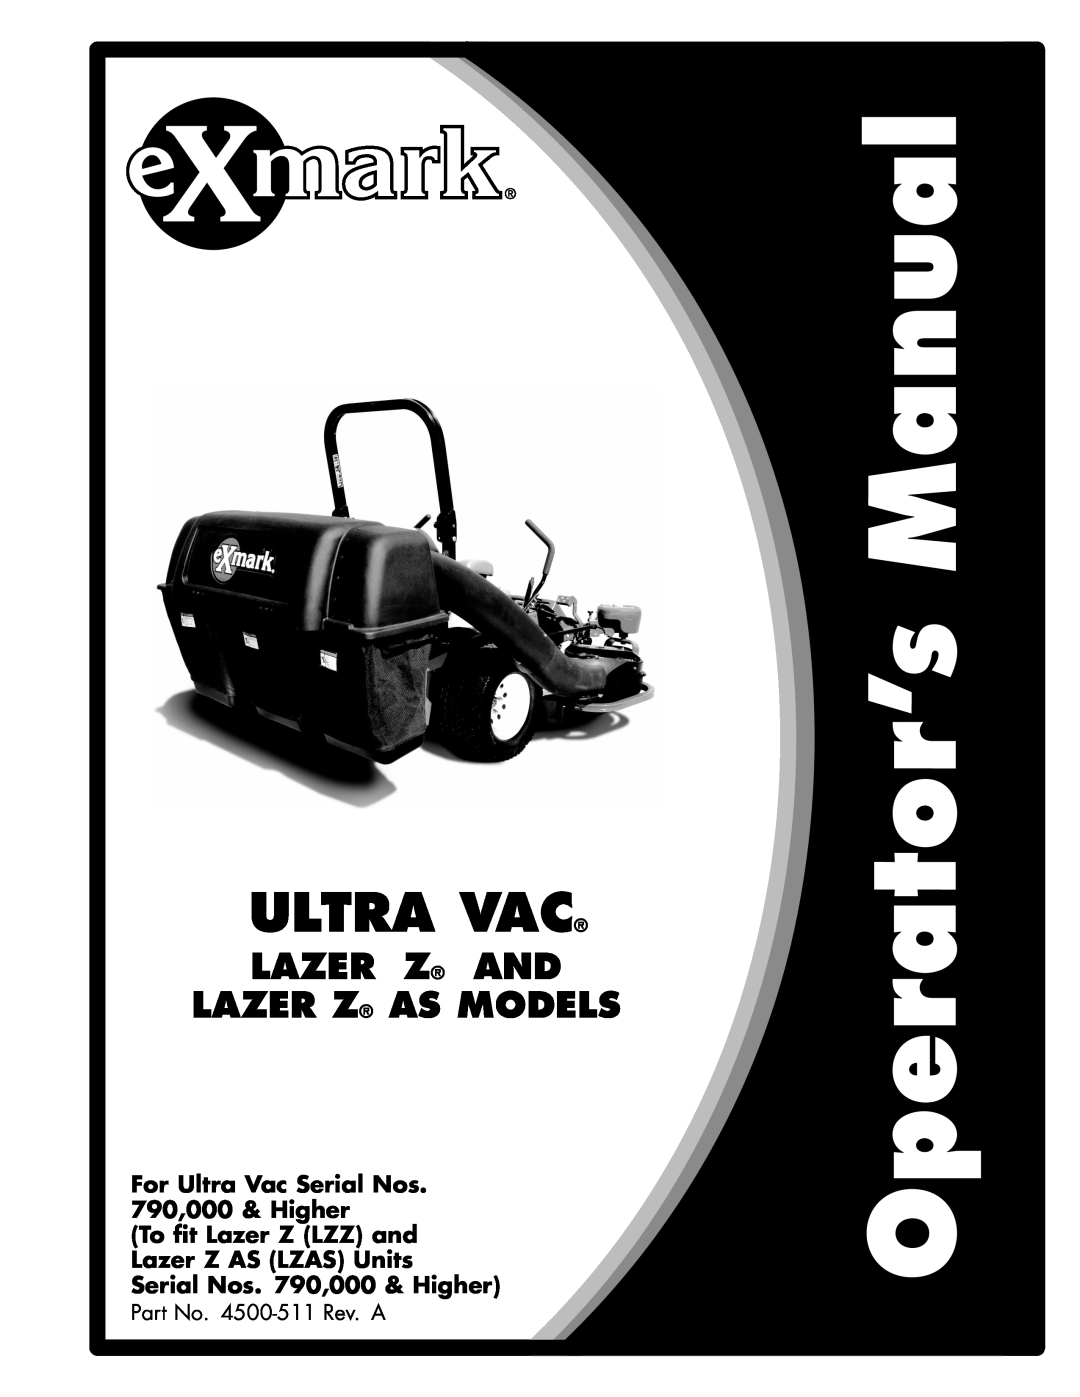 Exmark LAZER AS manual Lazer Z And Lazer Z As Models, For Ultra Vac Serial Nos. 790,000 & Higher 